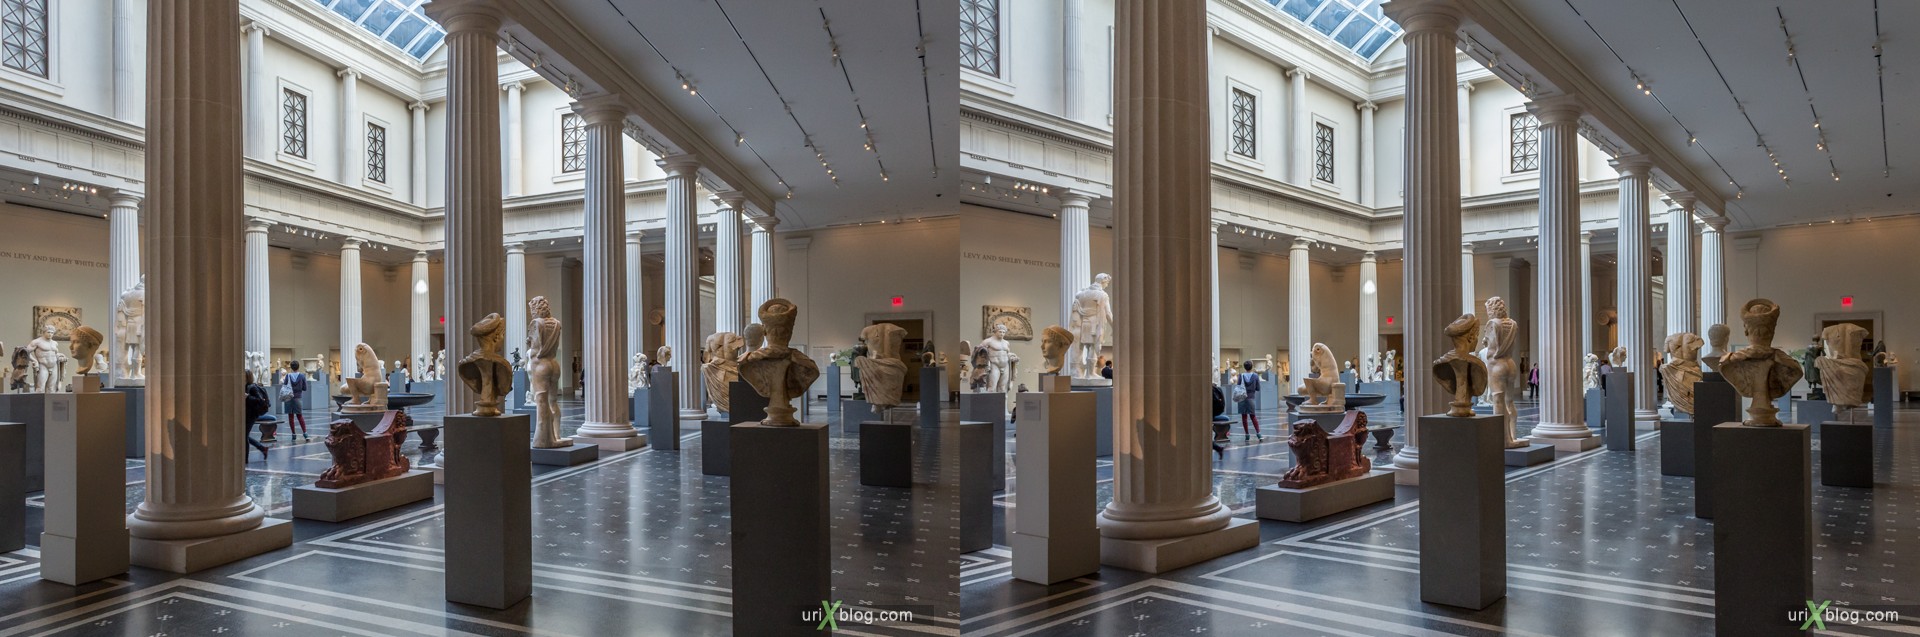 2013, Metropolitan Museum of Art, NYC, New York City, USA, 3D, stereo pair, cross-eyed, crossview, cross view stereo pair, stereoscopic